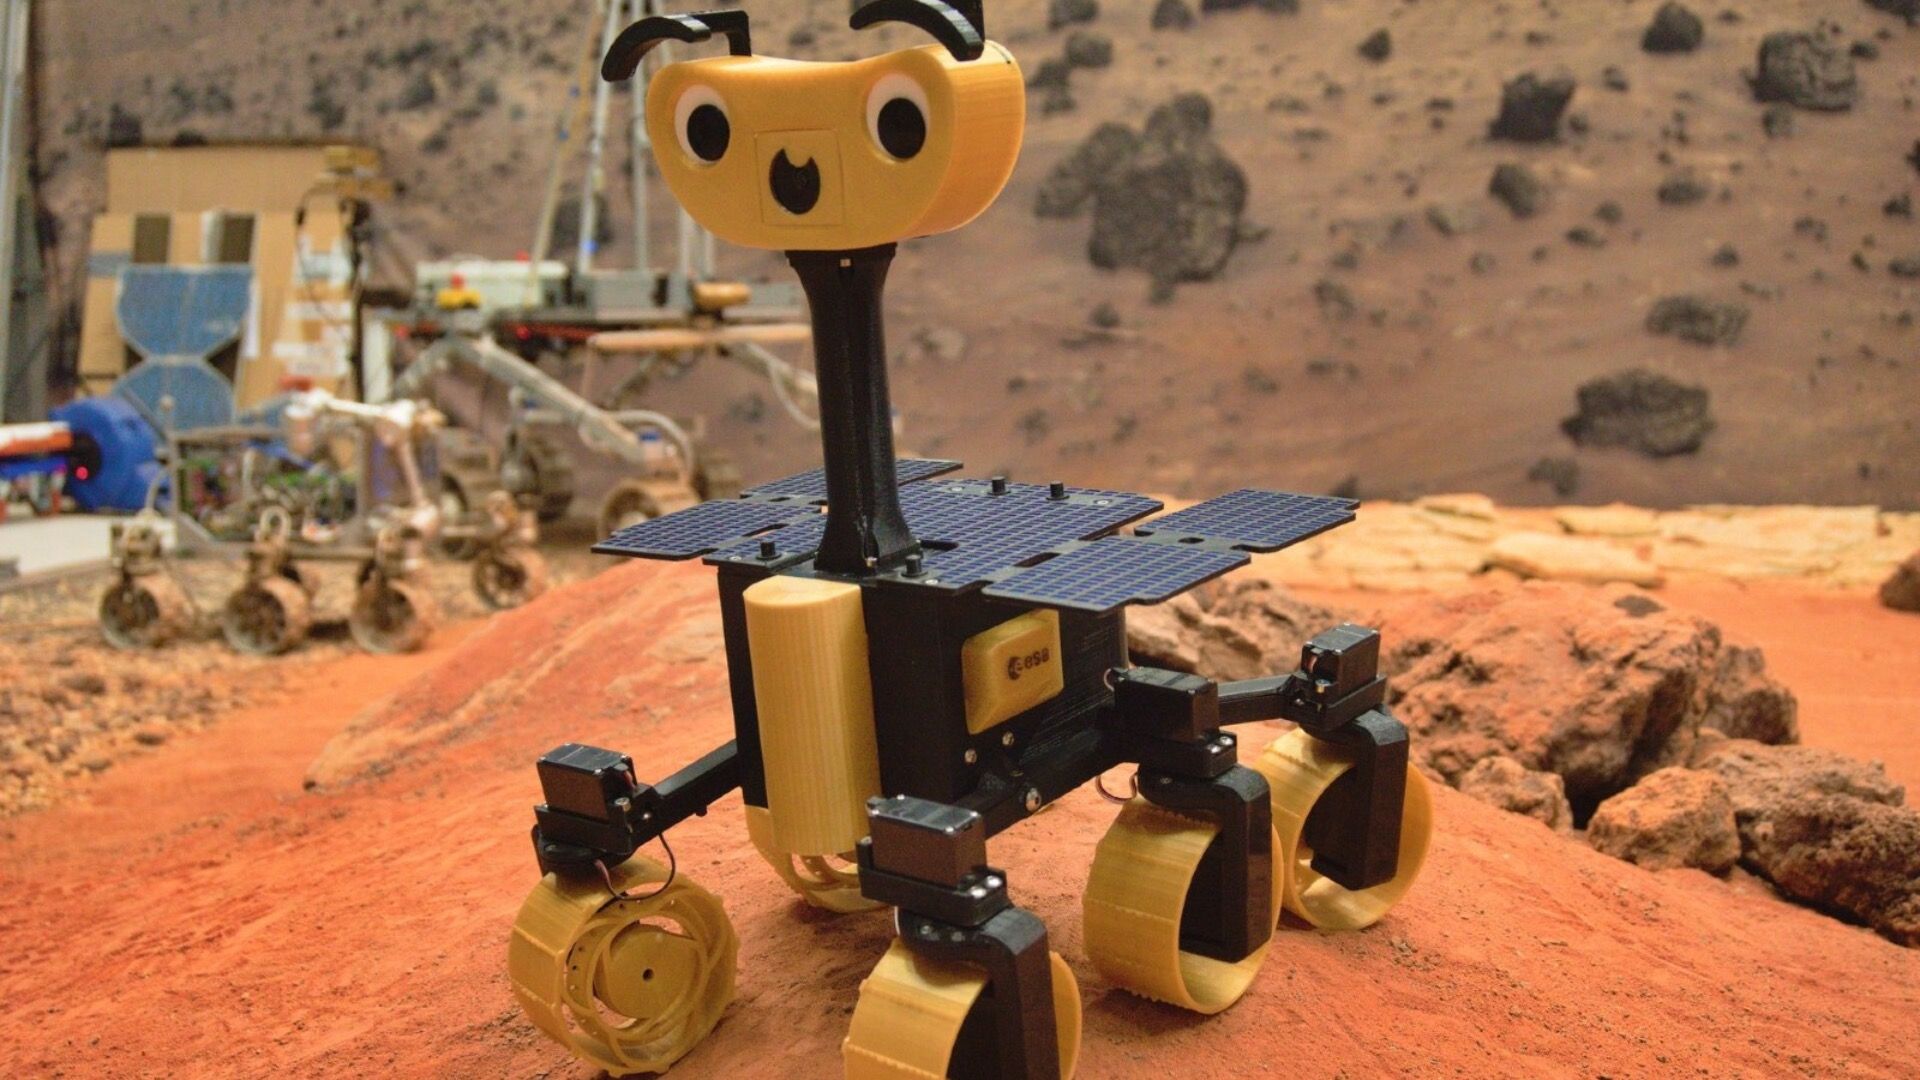 ExoMy Rover